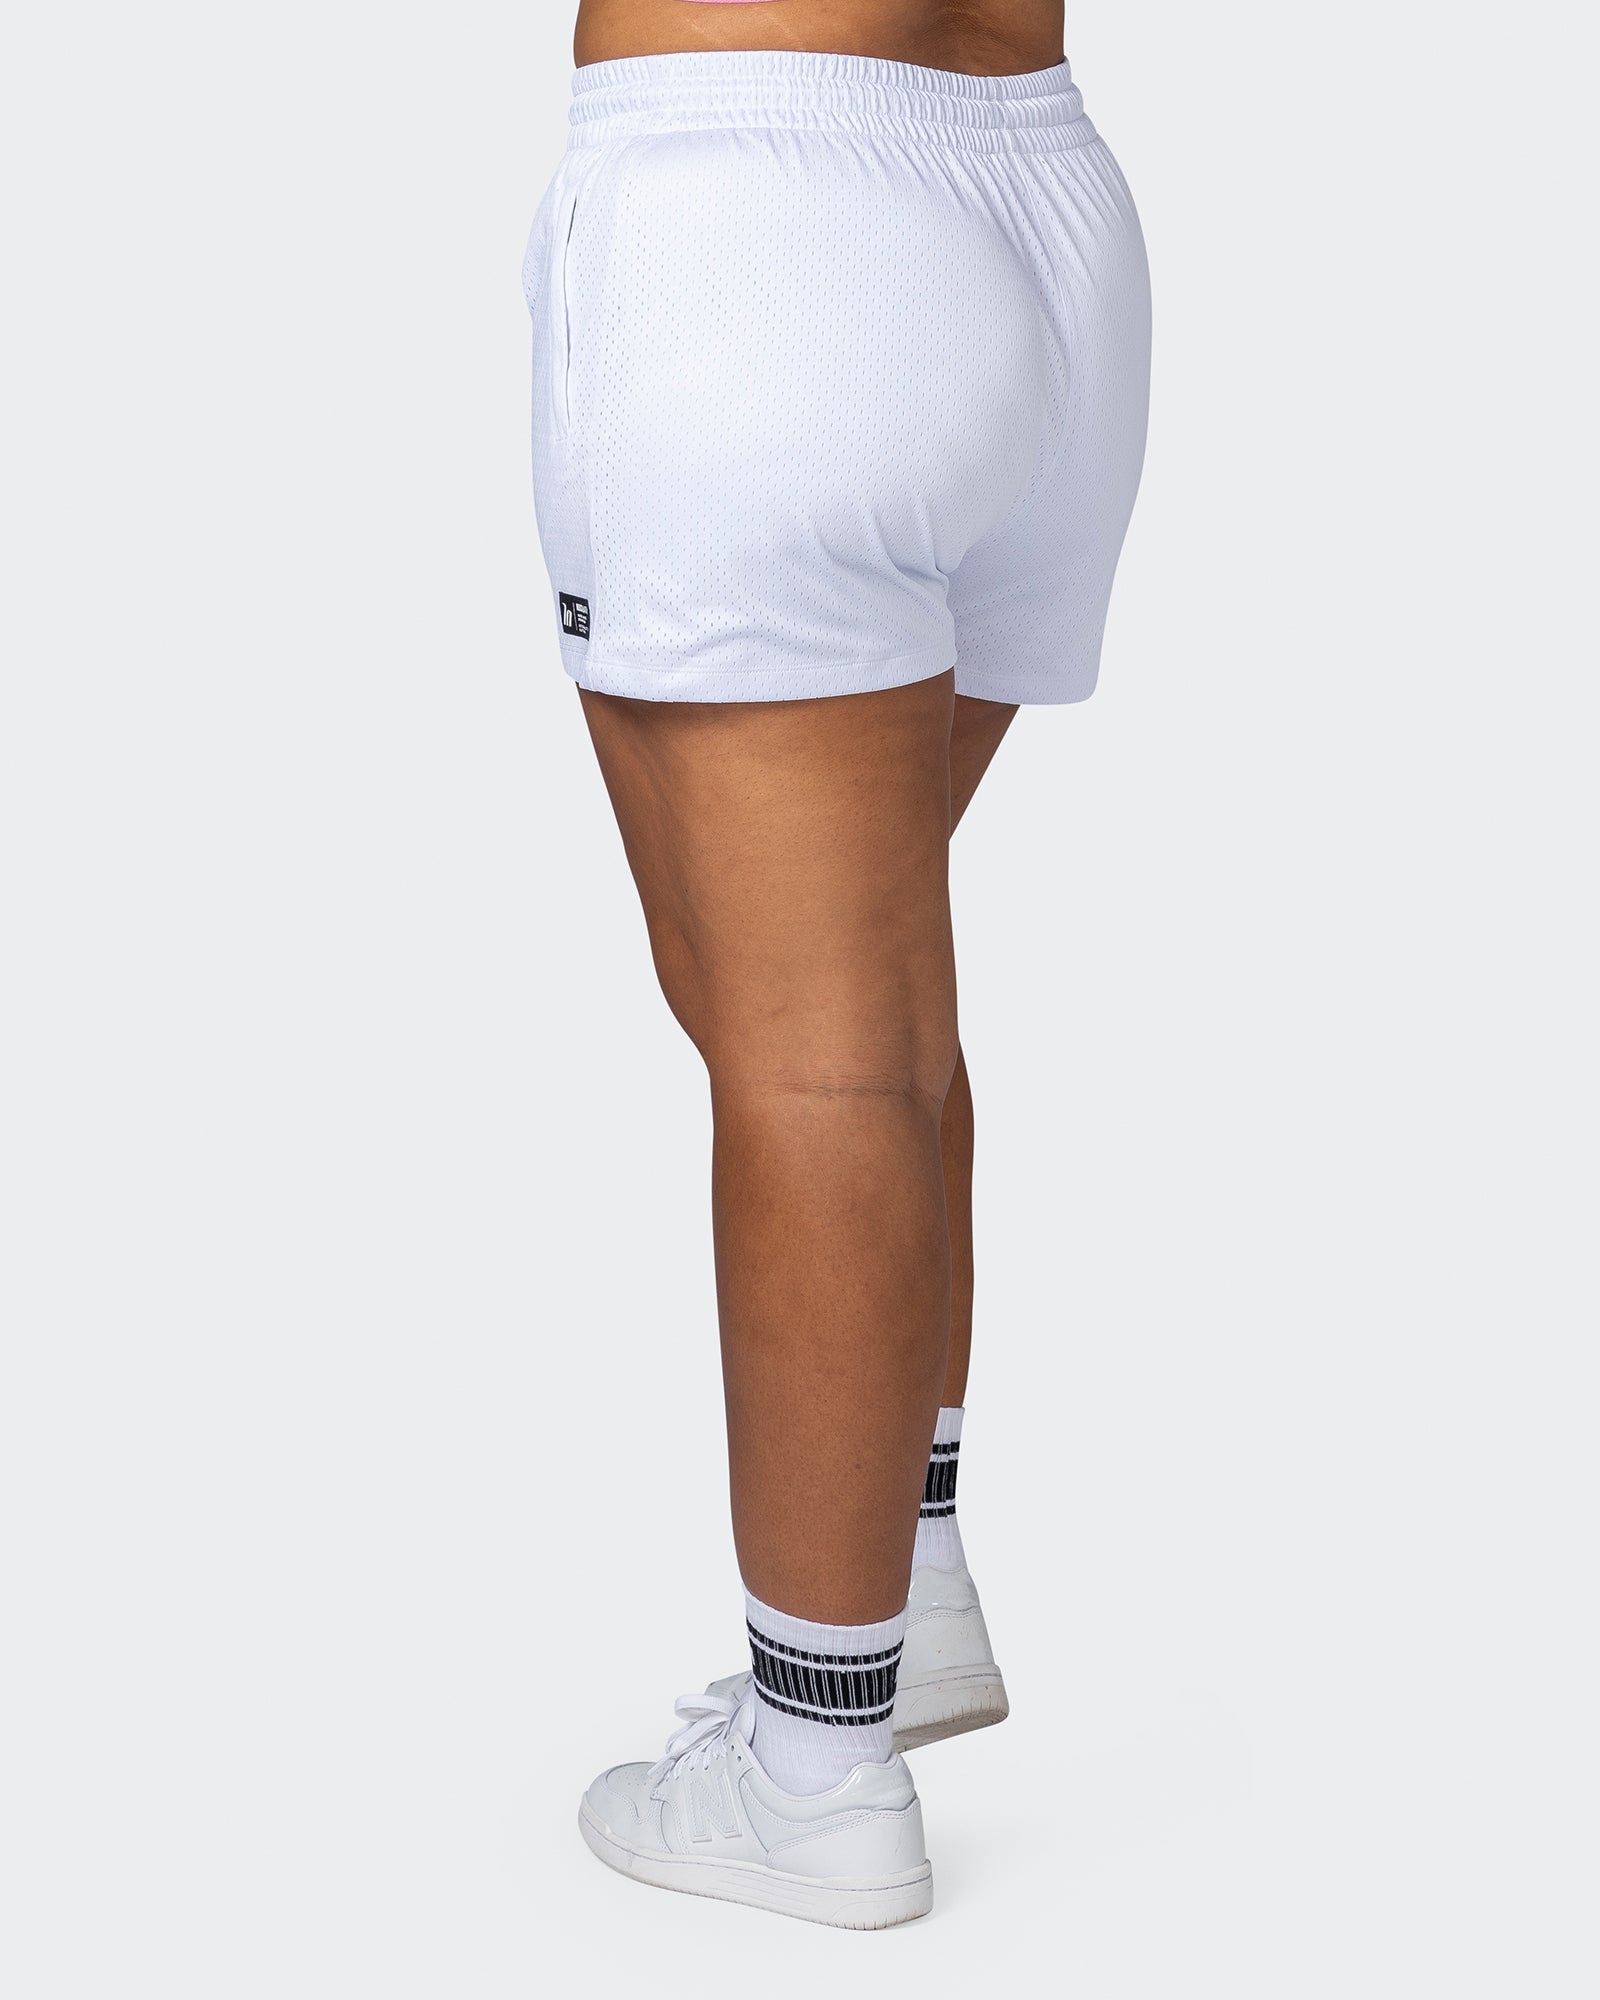 musclenation Shorts Limitless Mesh Shorts - White